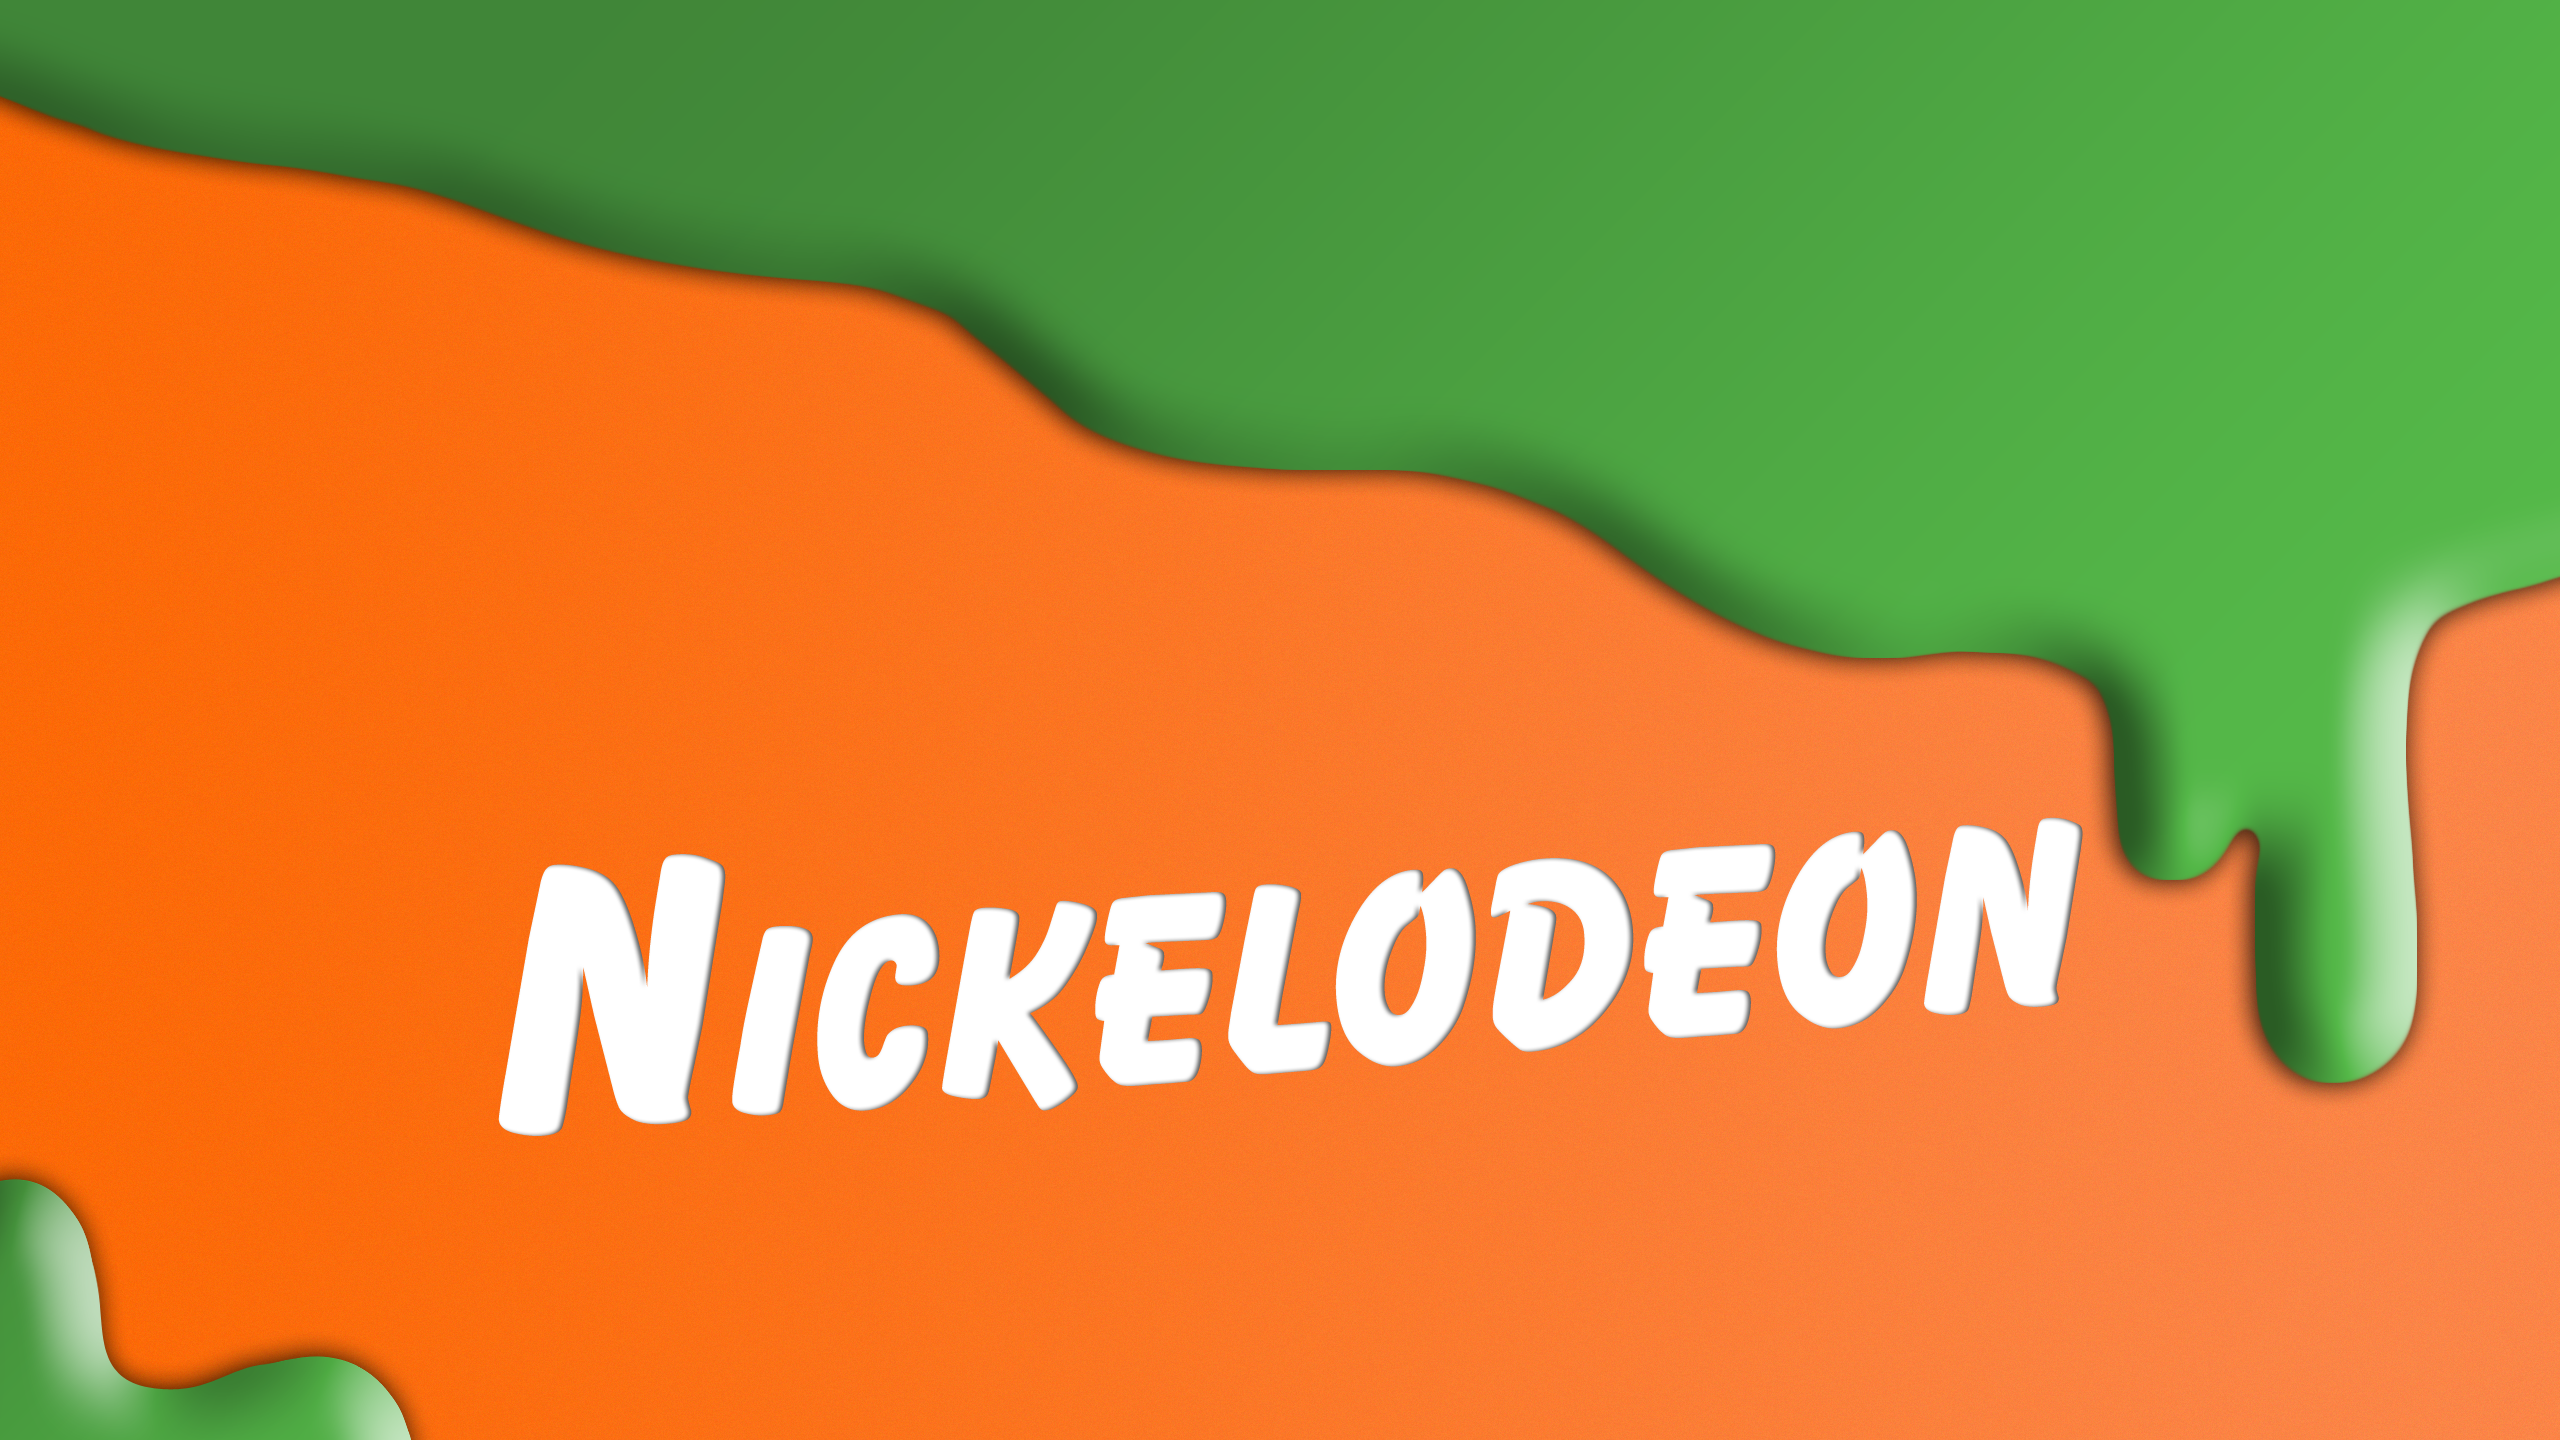 Nickelodeon Wallpaper By Christhenerd On Deviantart HD Wallpapers Download Free Images Wallpaper [wallpaper981.blogspot.com]